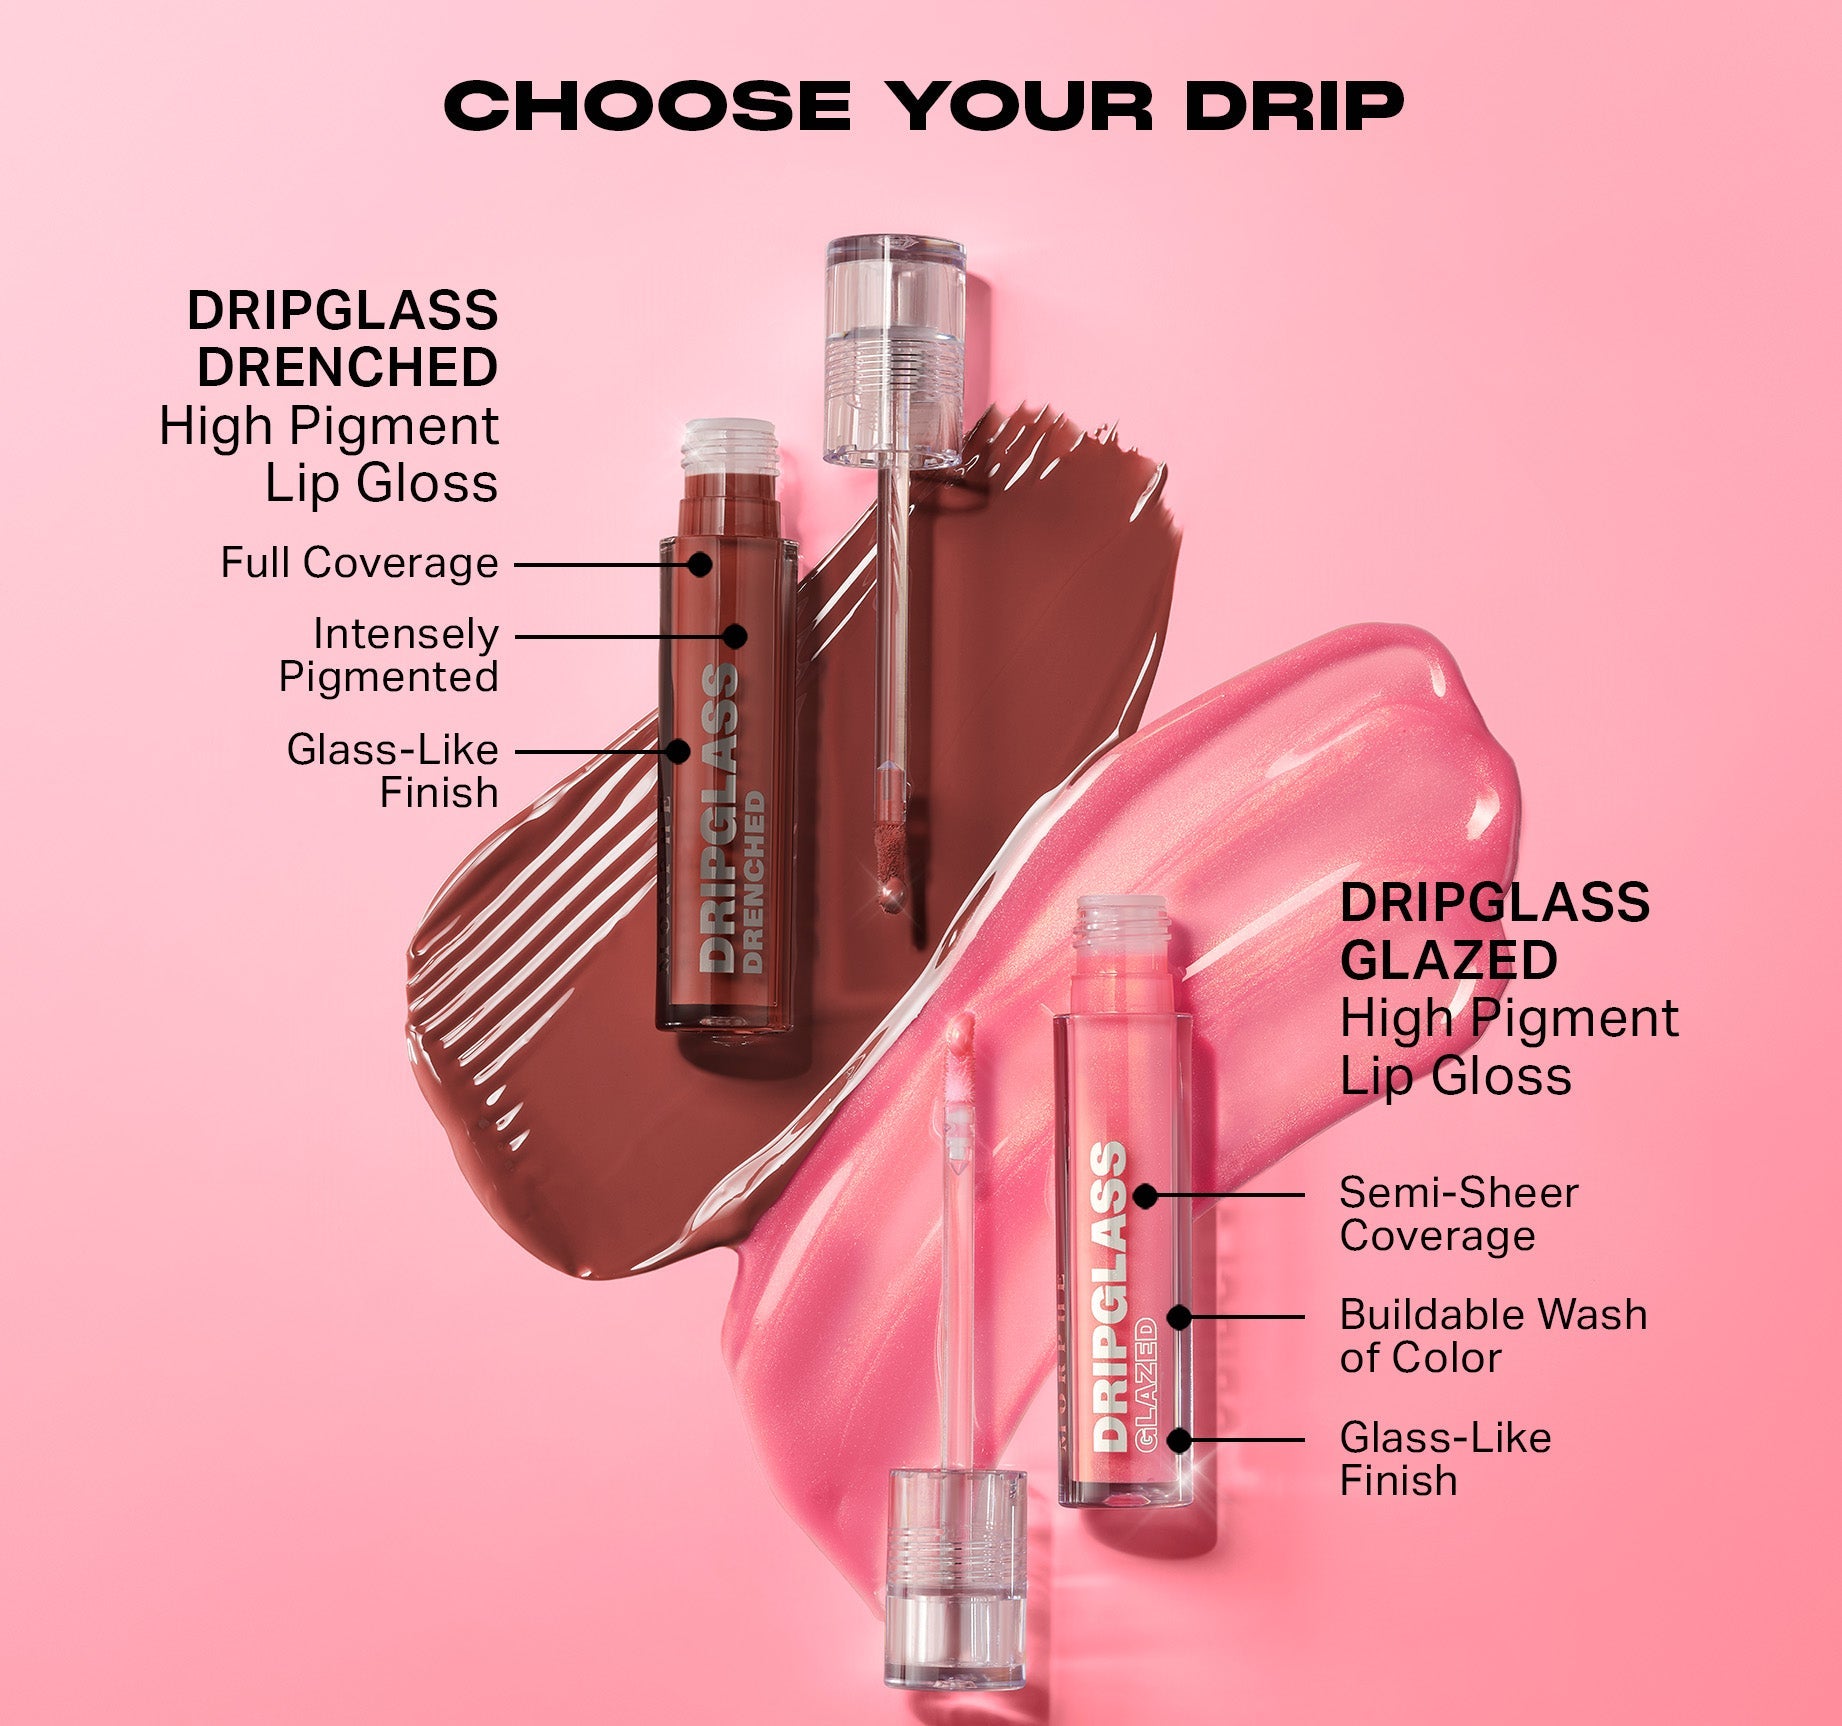 Dripglass Drenched High Pigment Lip Gloss - Mauve Splash - Image 6